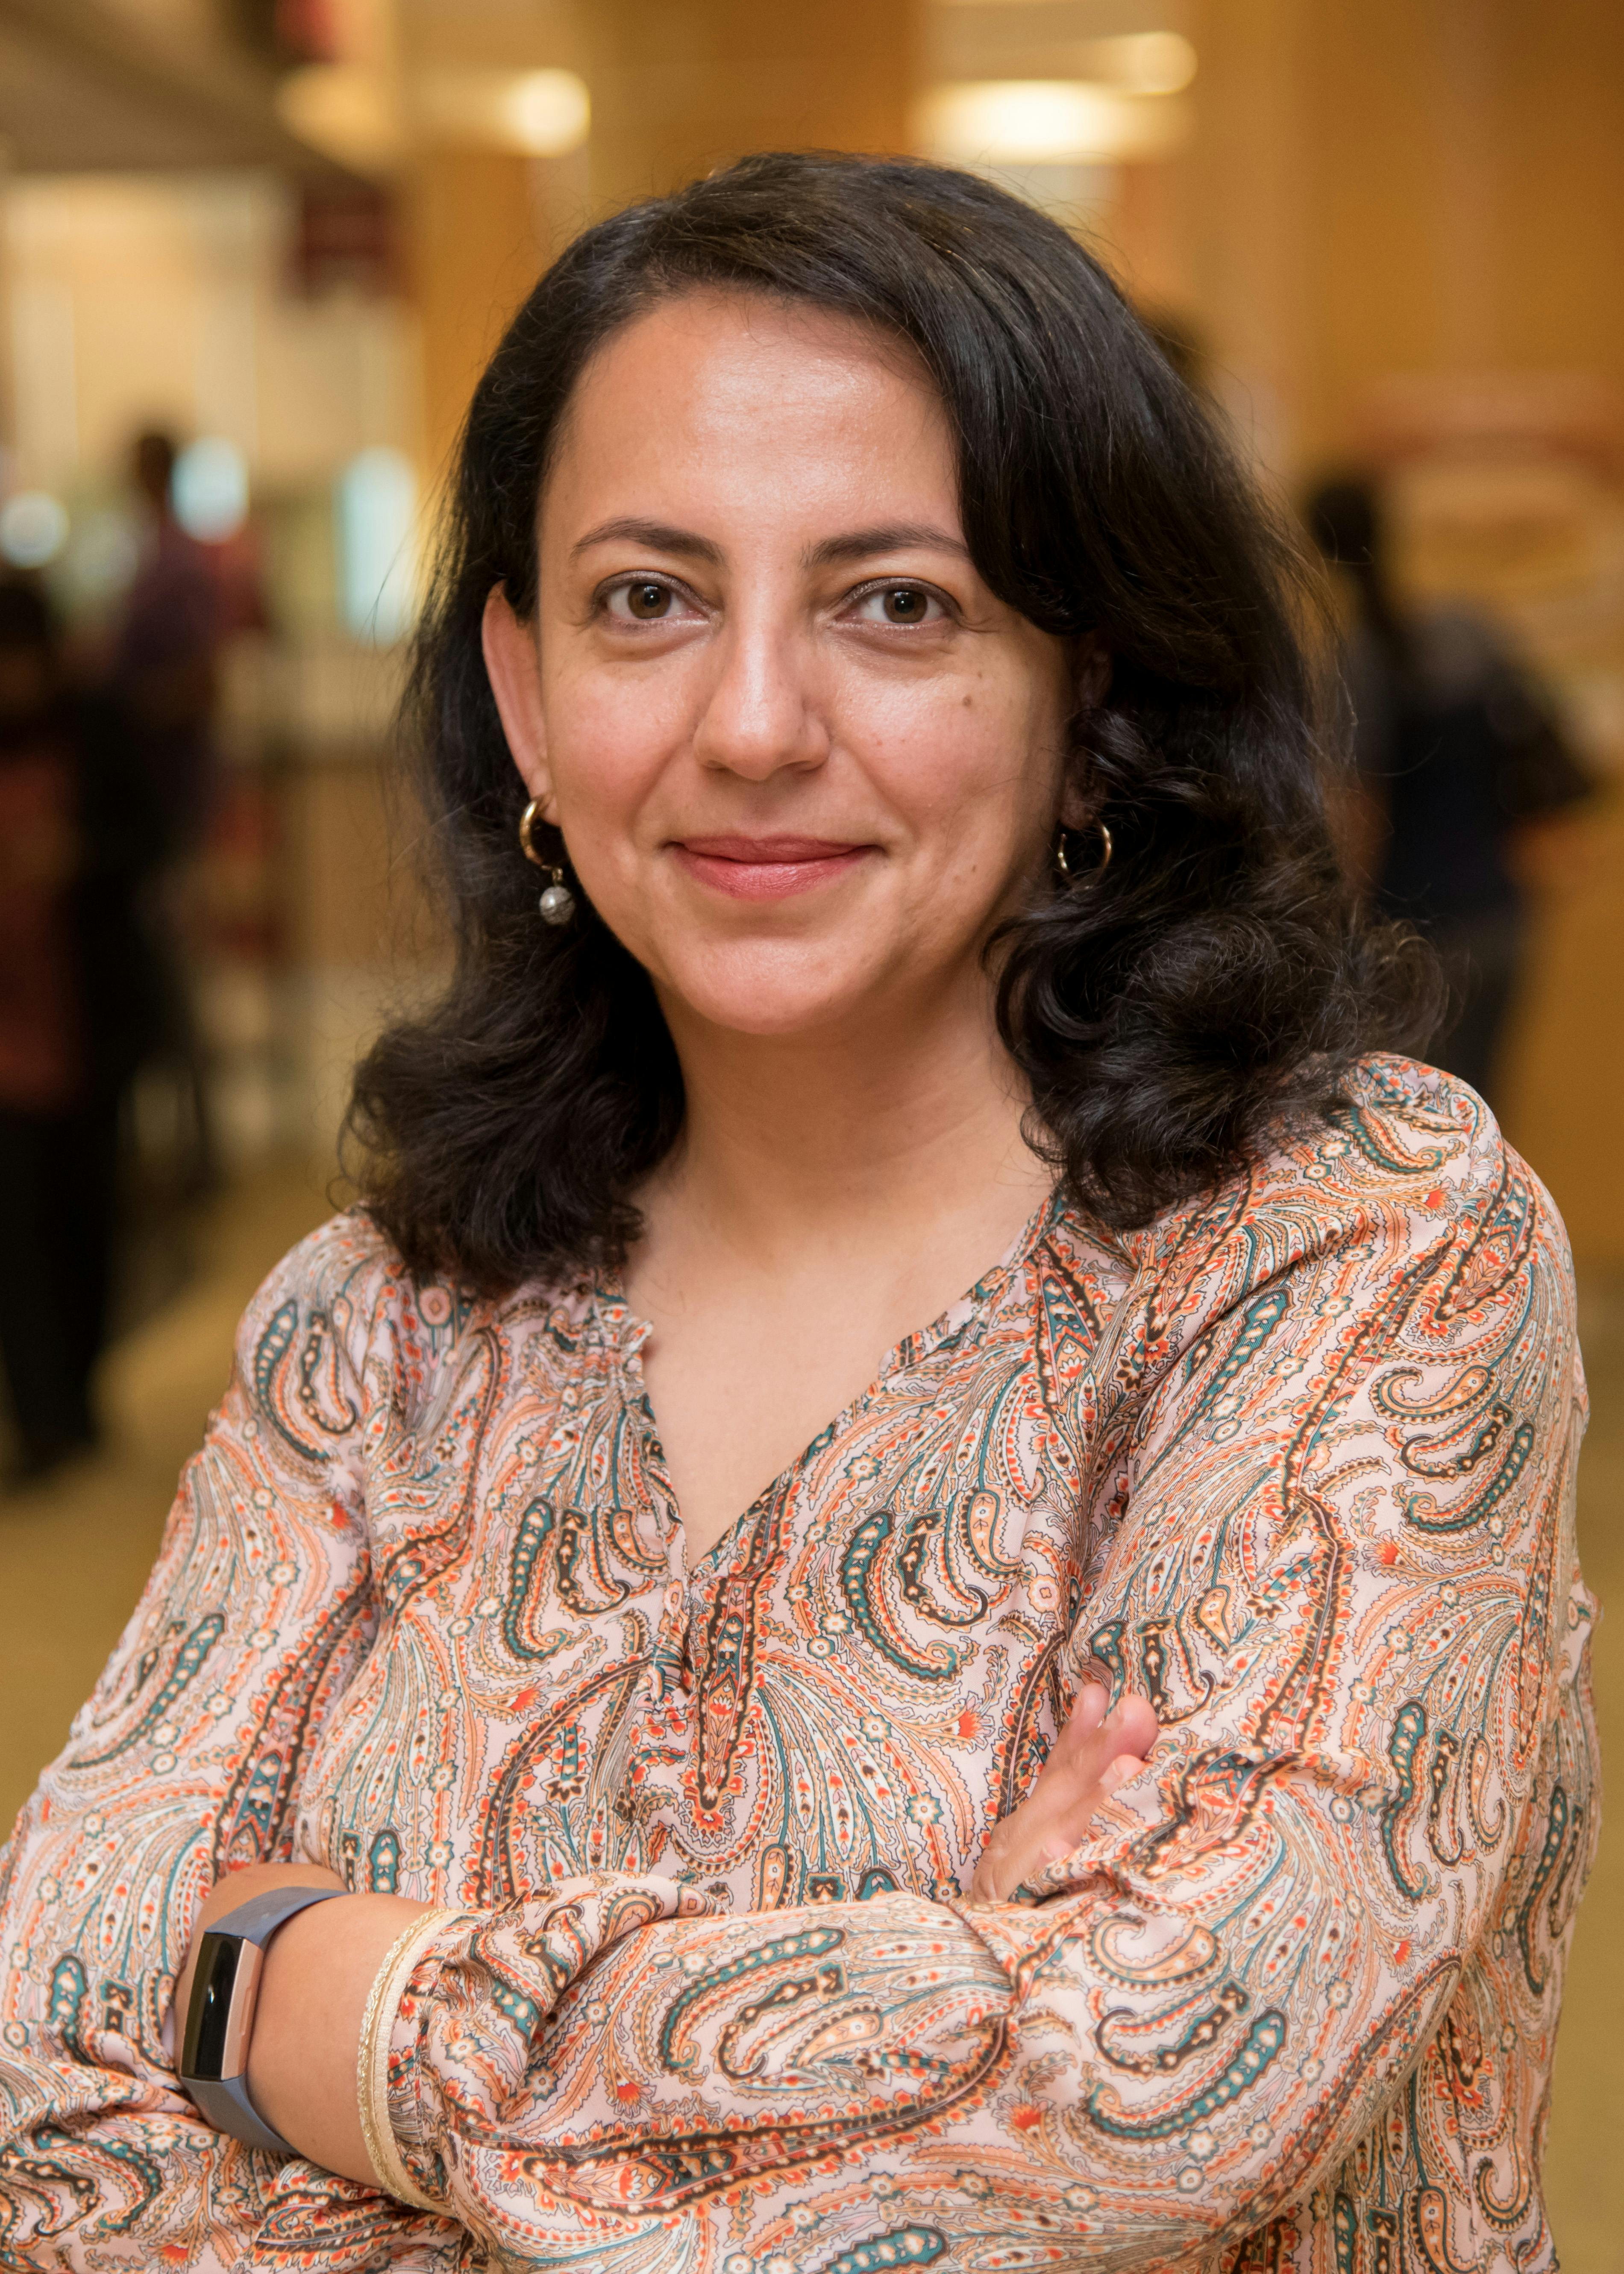 Team member, Sawsan Al-Refaei